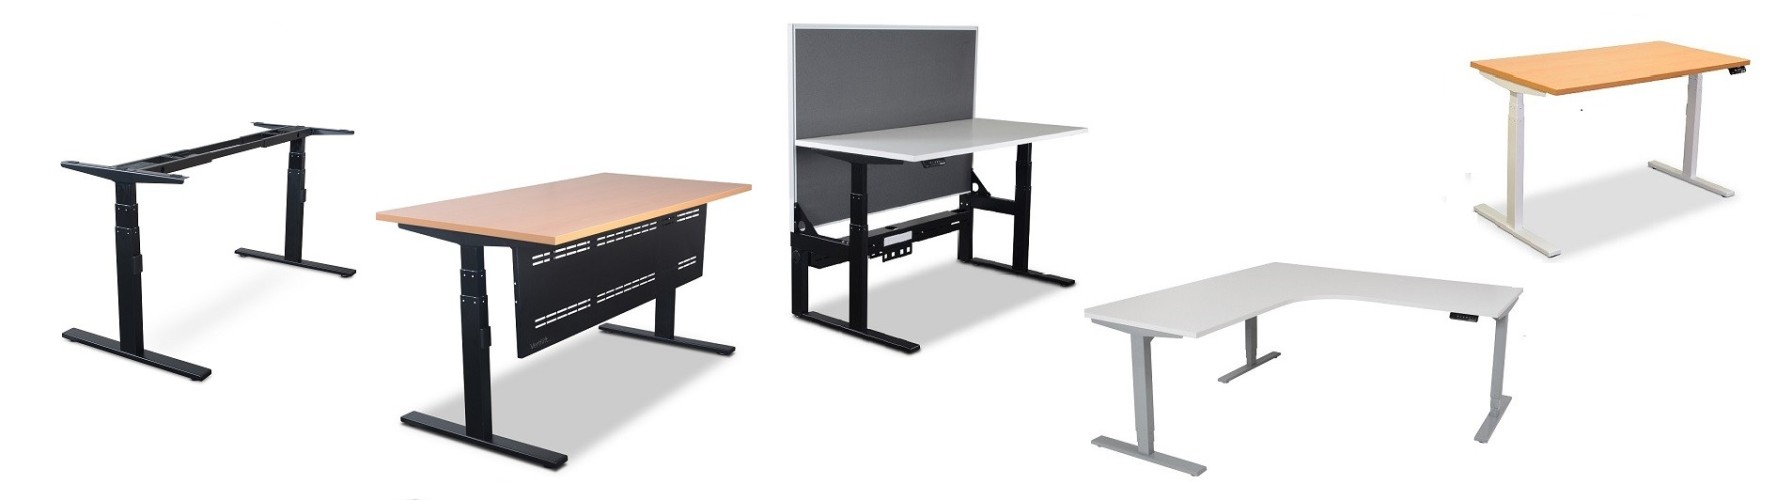 Desk - Vertilift 2-Leg Electric